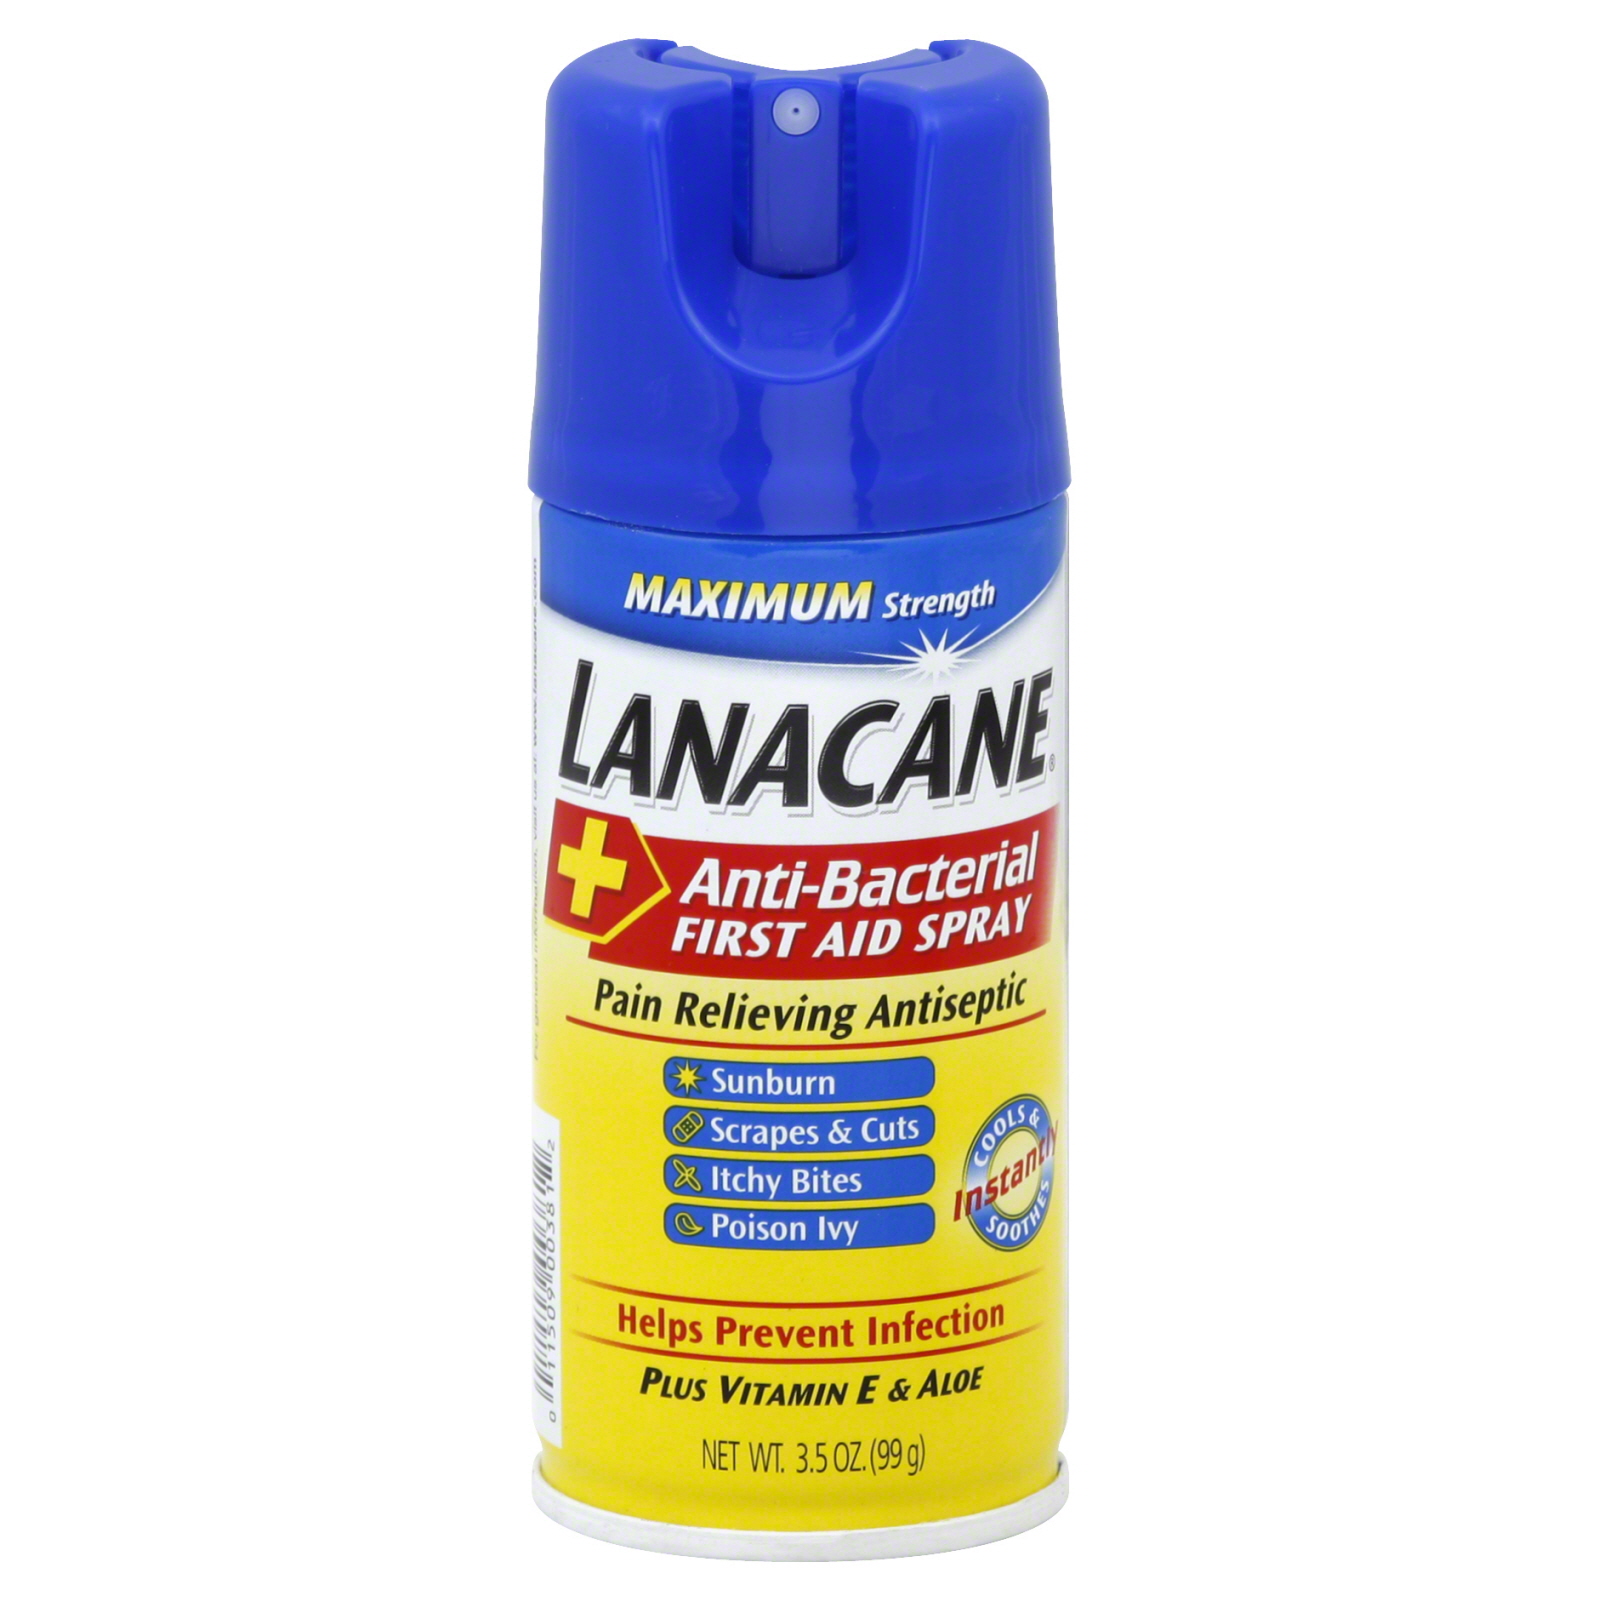 Lanacane First Aid Spray, Anti-Bacterial, Maximum Strength, 3.5 oz (99 g)